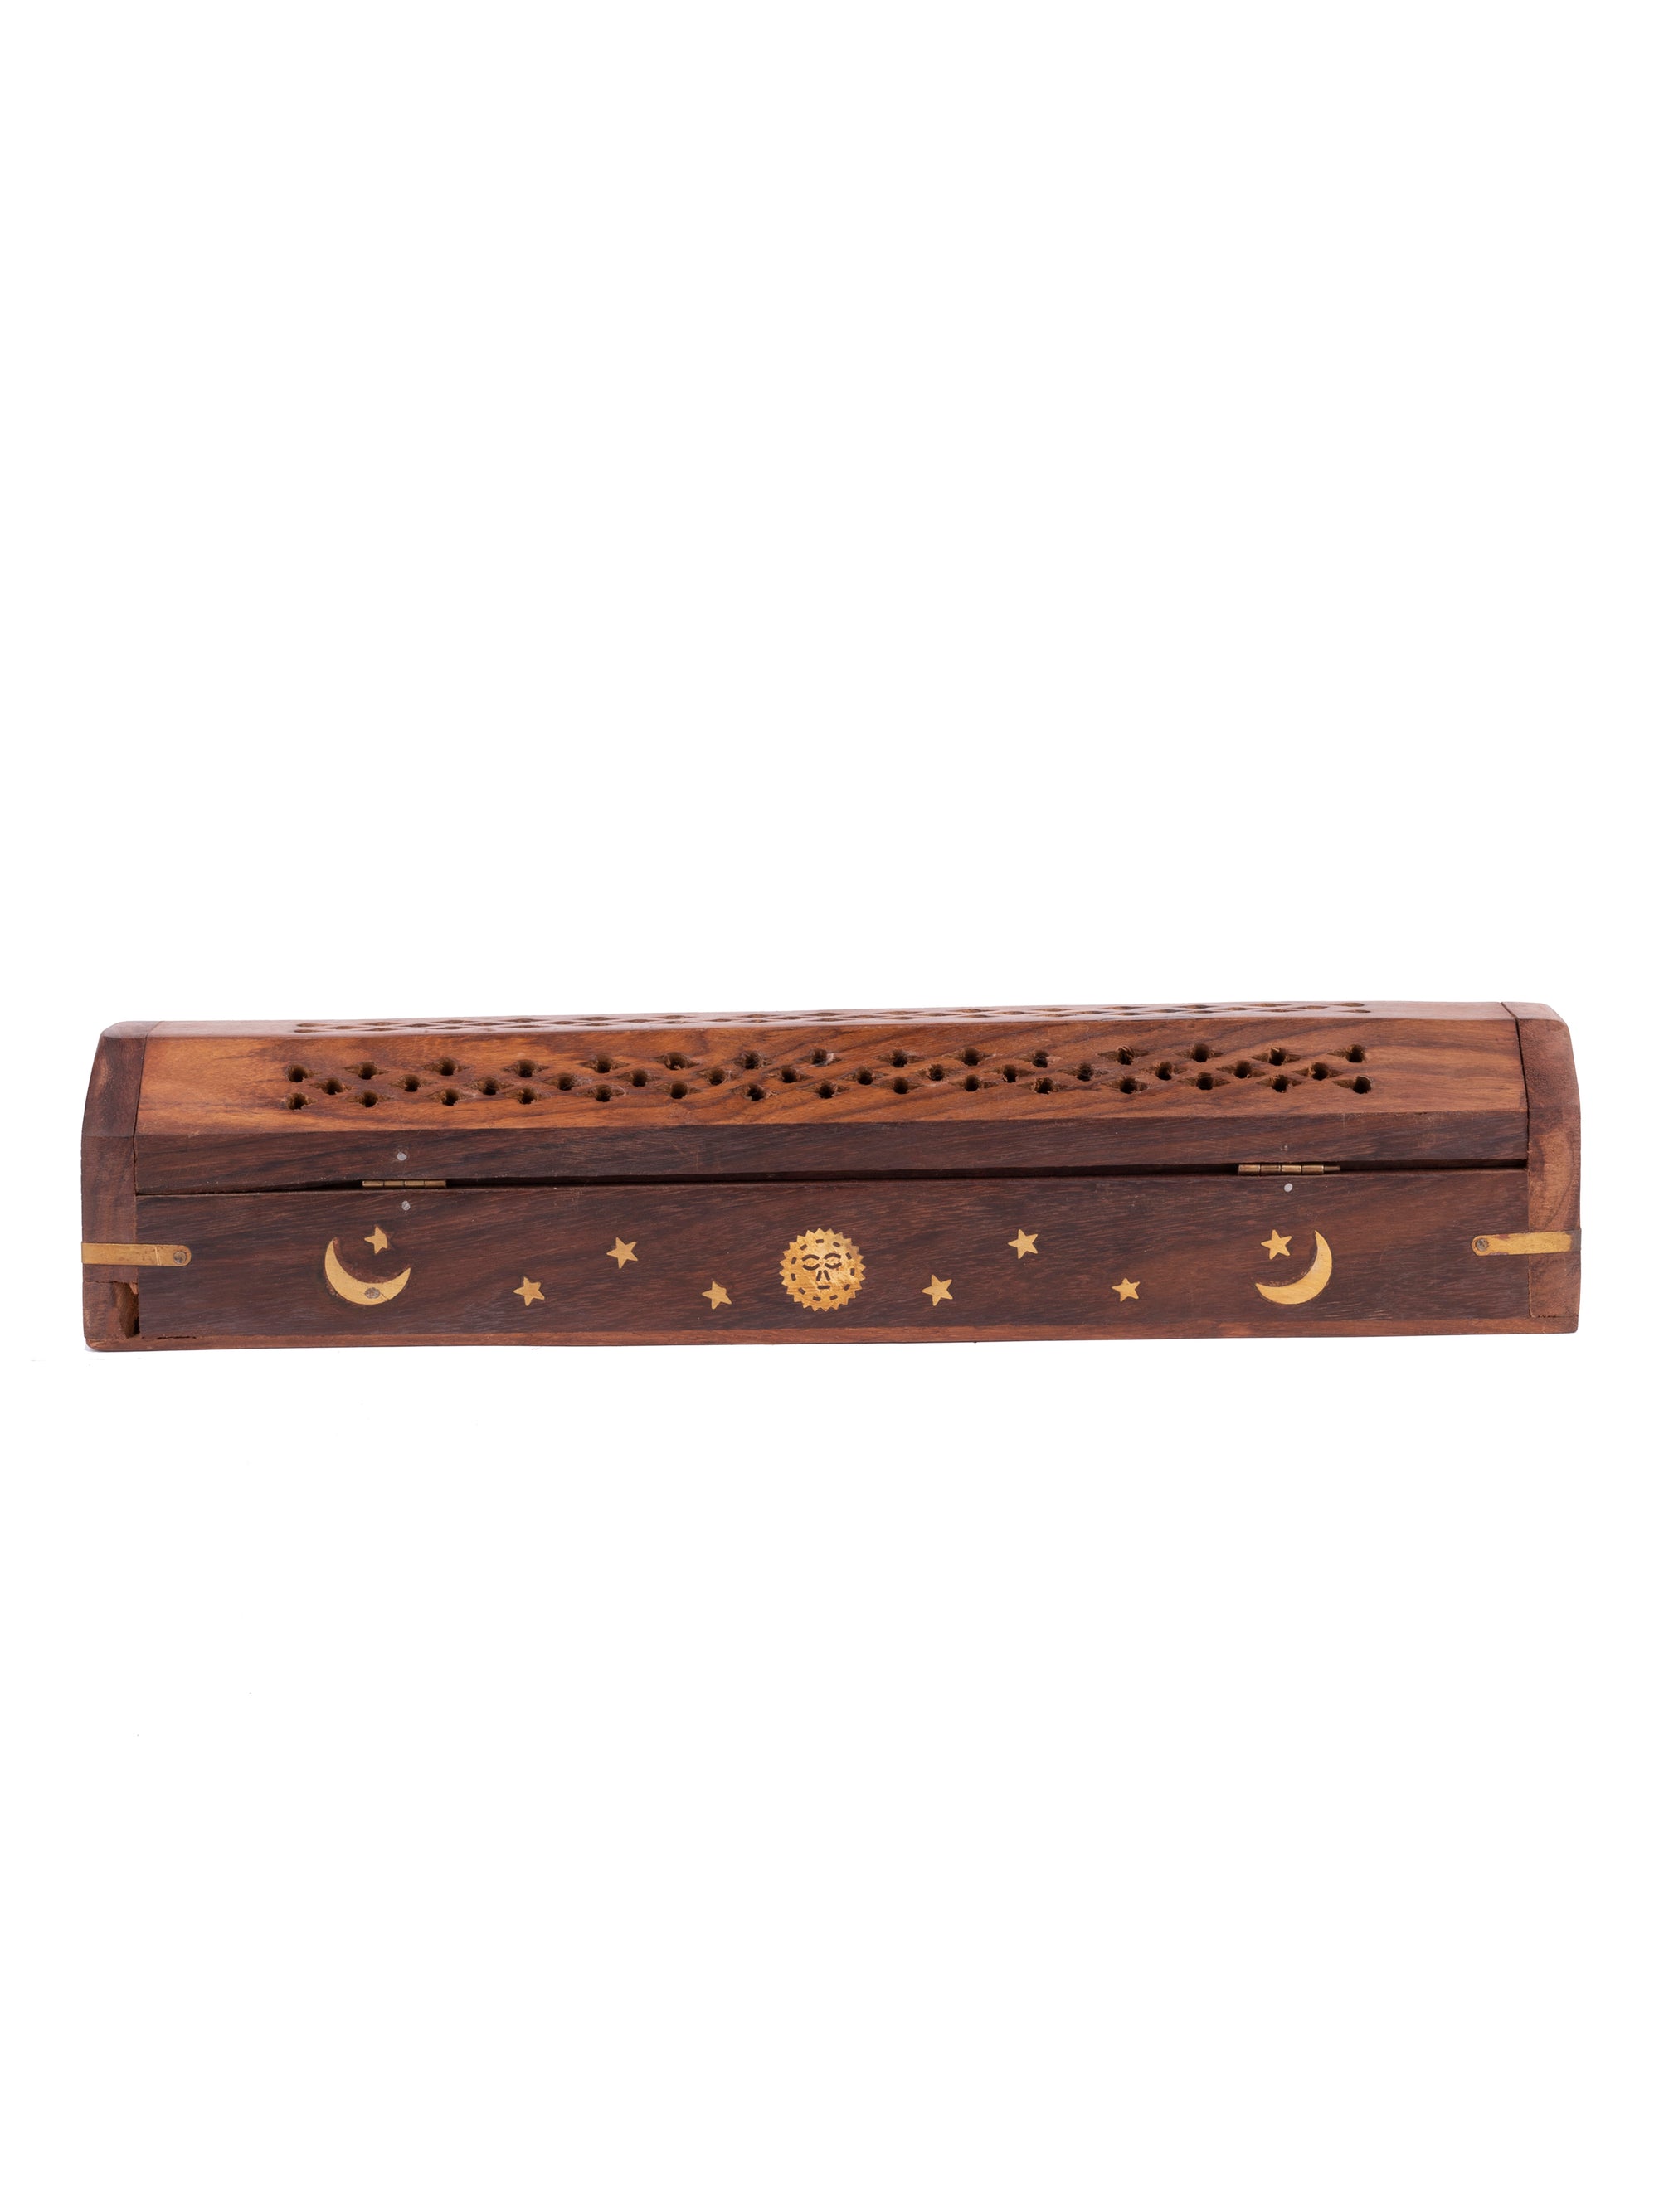 Shisham Wood and Brass Dhoop / Agarbatti / Incense Stick Box - The Heritage Artifacts